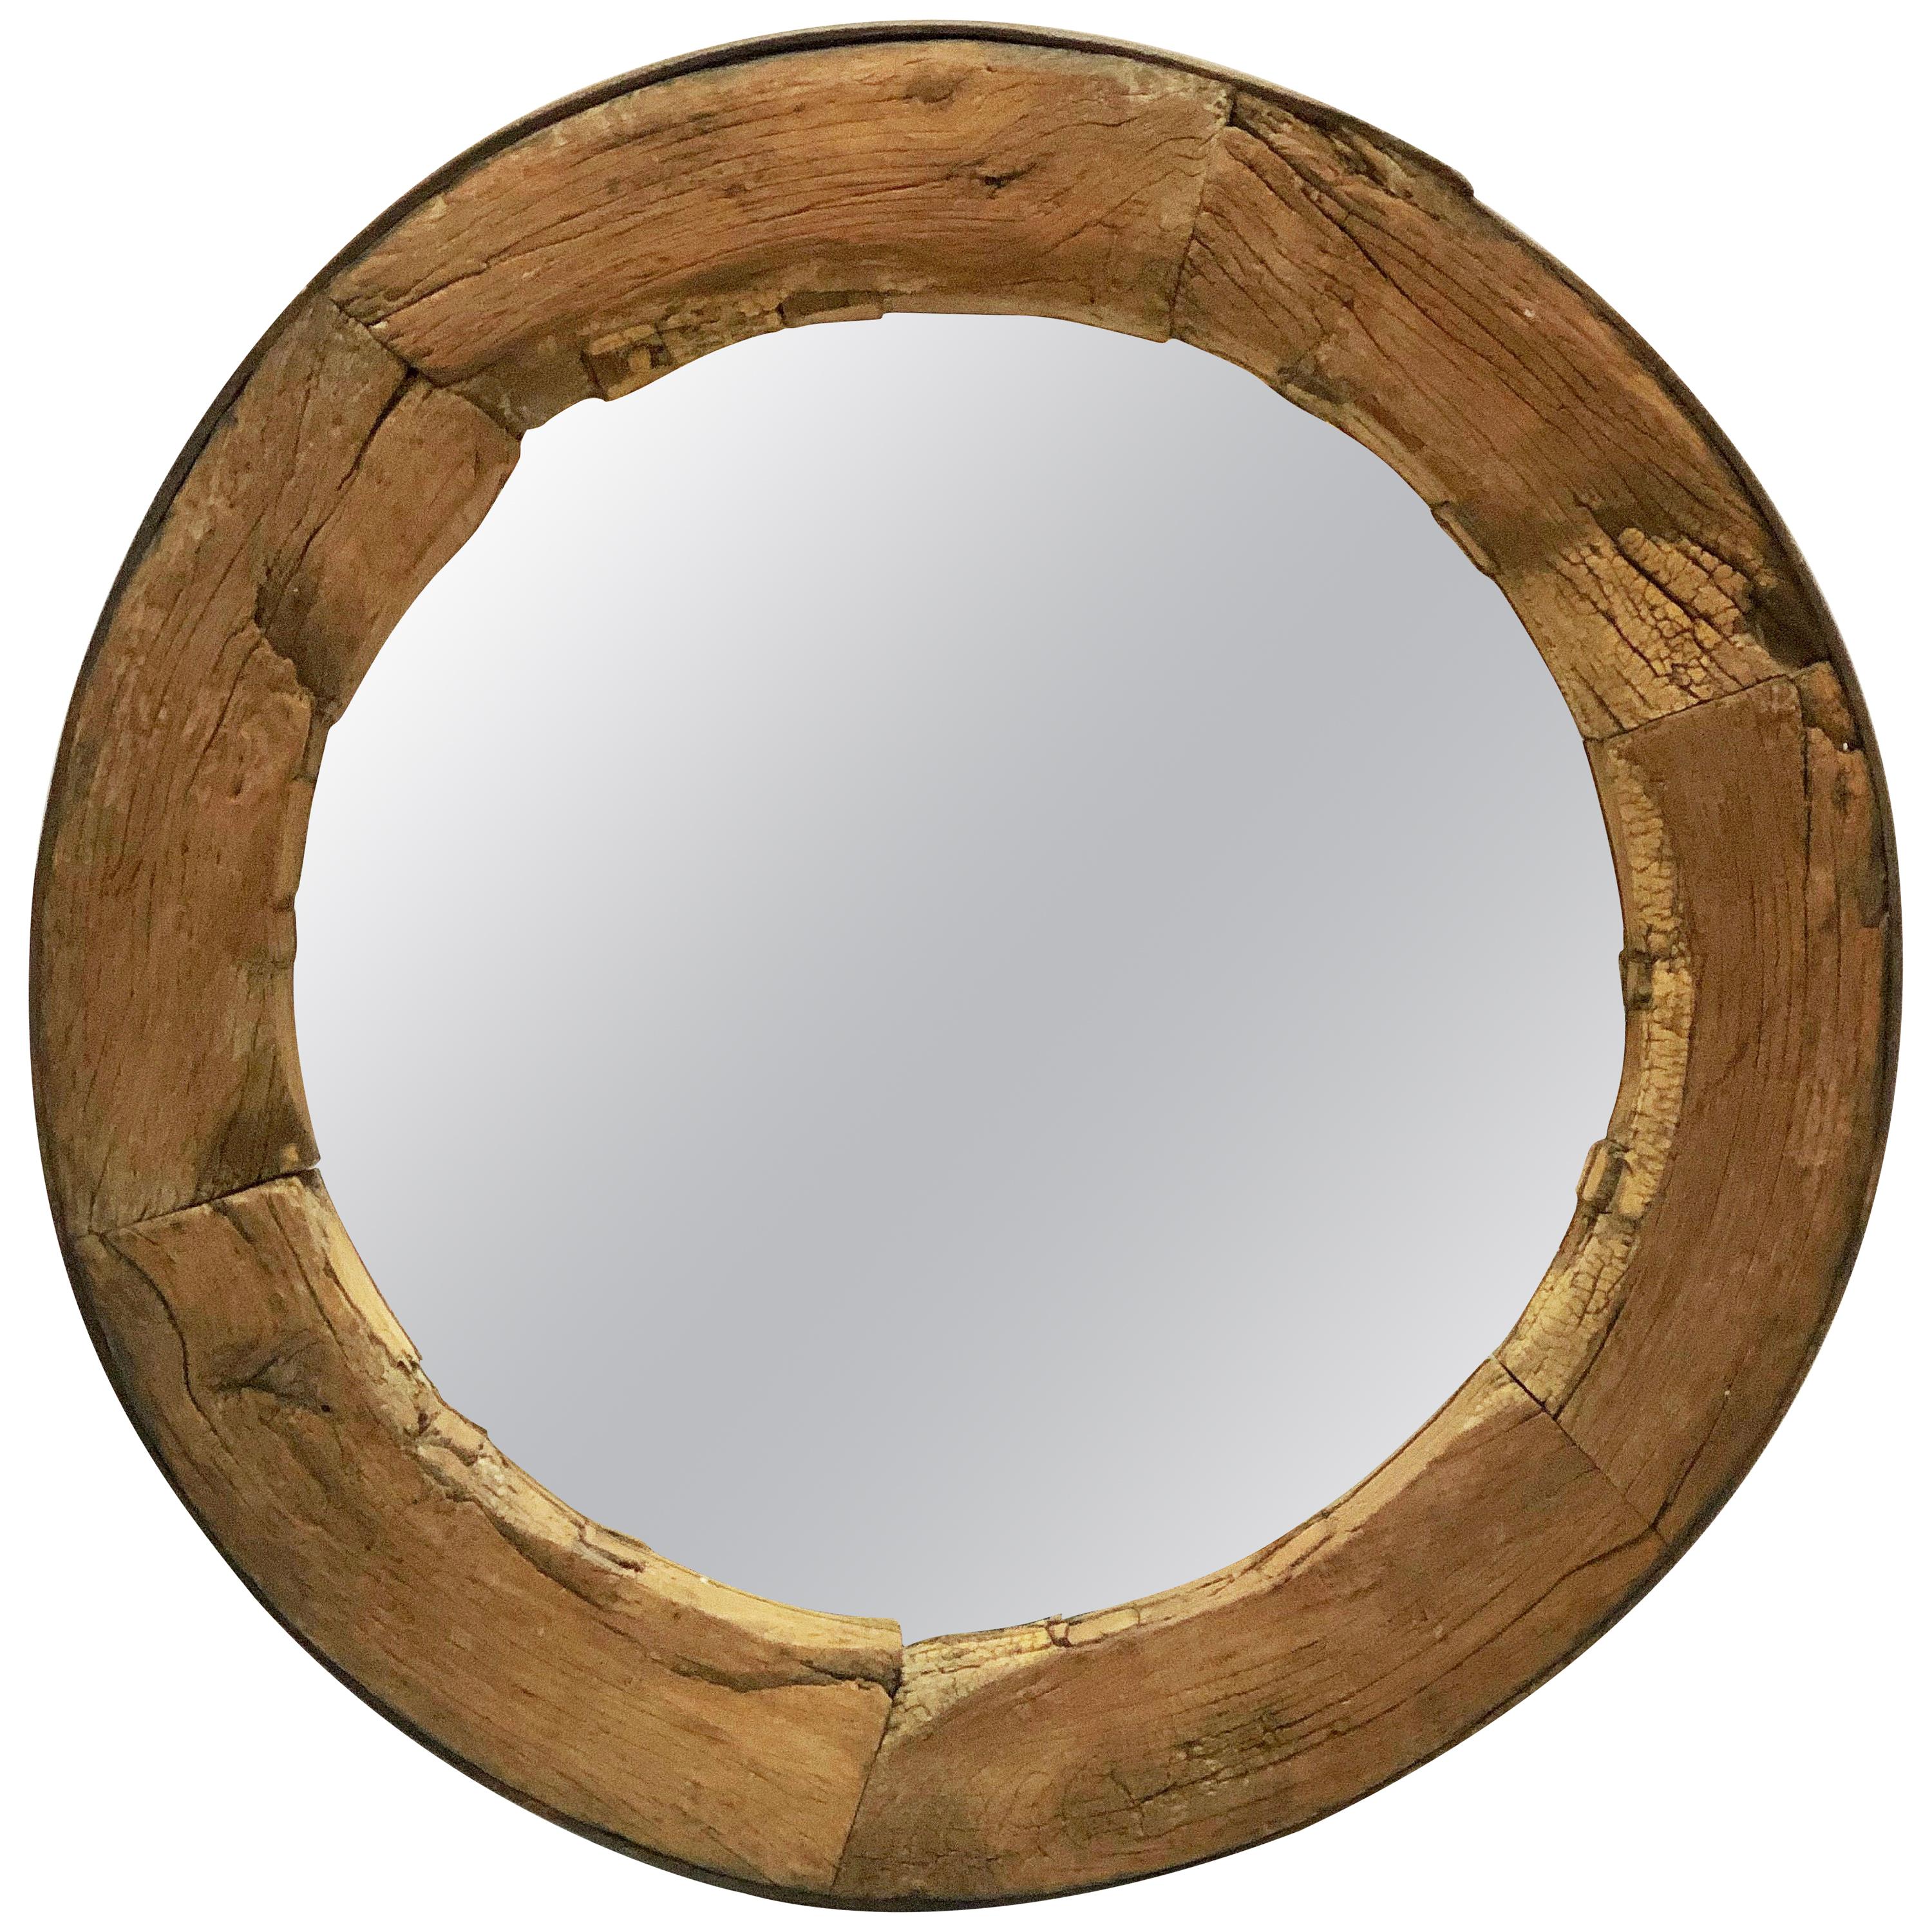 Rustic English Round Mirror in Wagon Wheel Frame of Oak and Iron (Diameter 43)